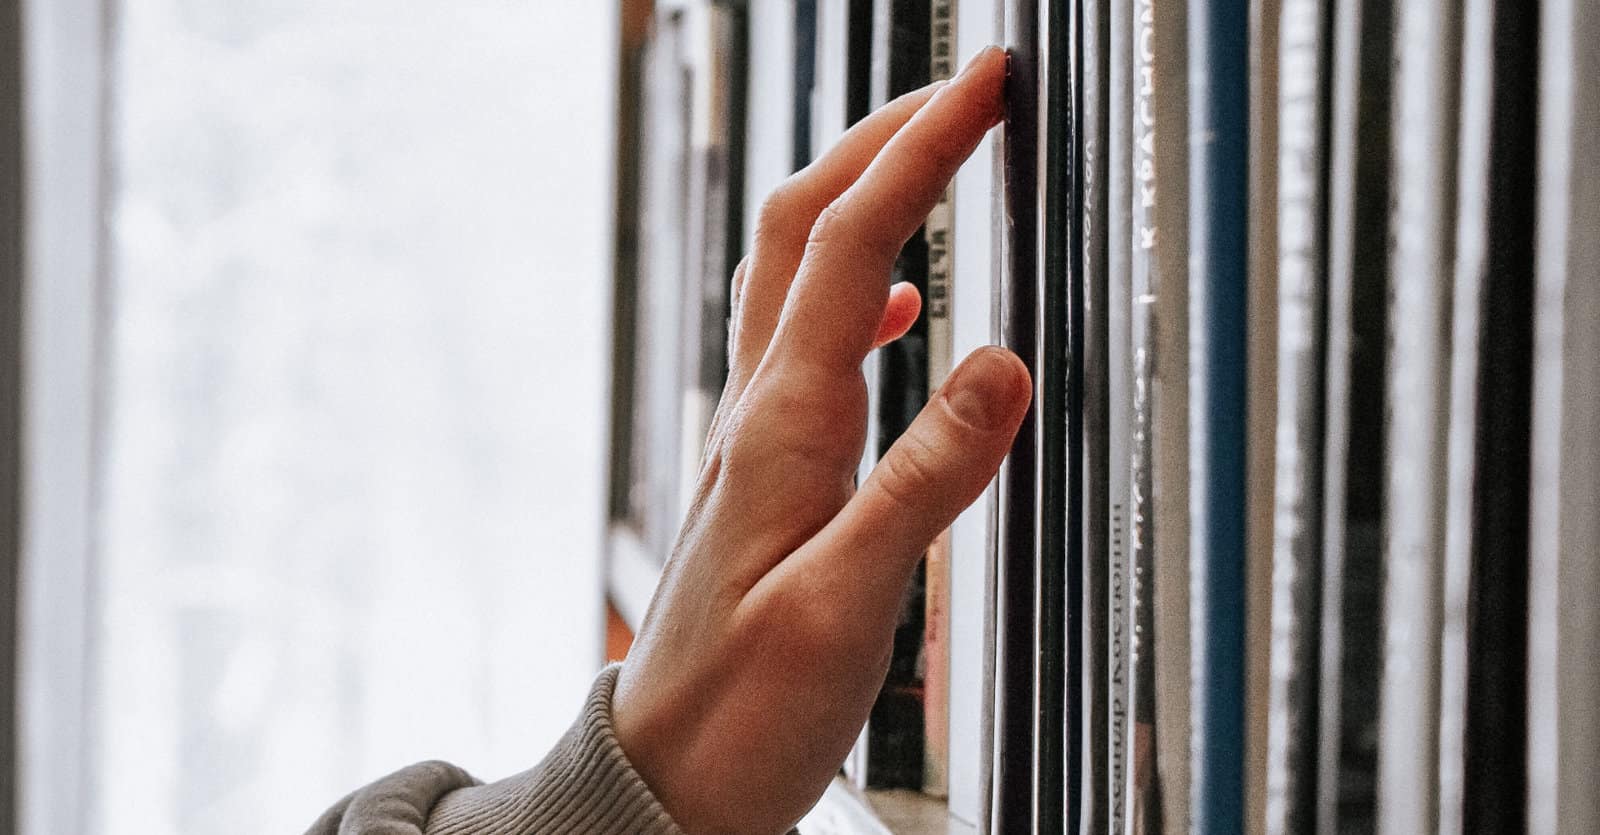 Hand touching books on a shelf, perhaps in a library (Credit: Guzel Maksutova, Unsplash)